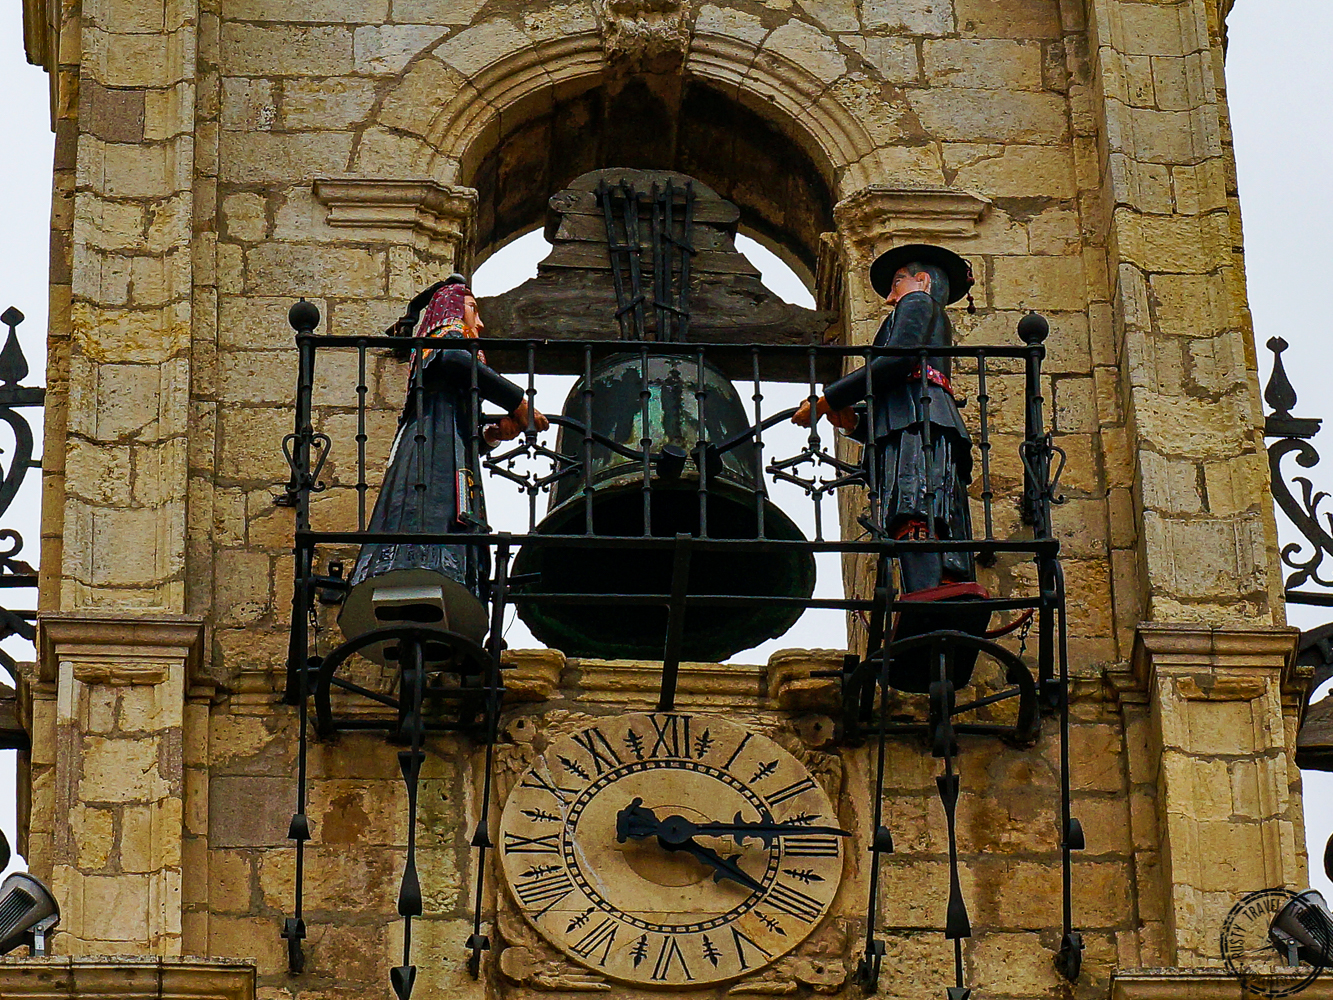 Astorga bells